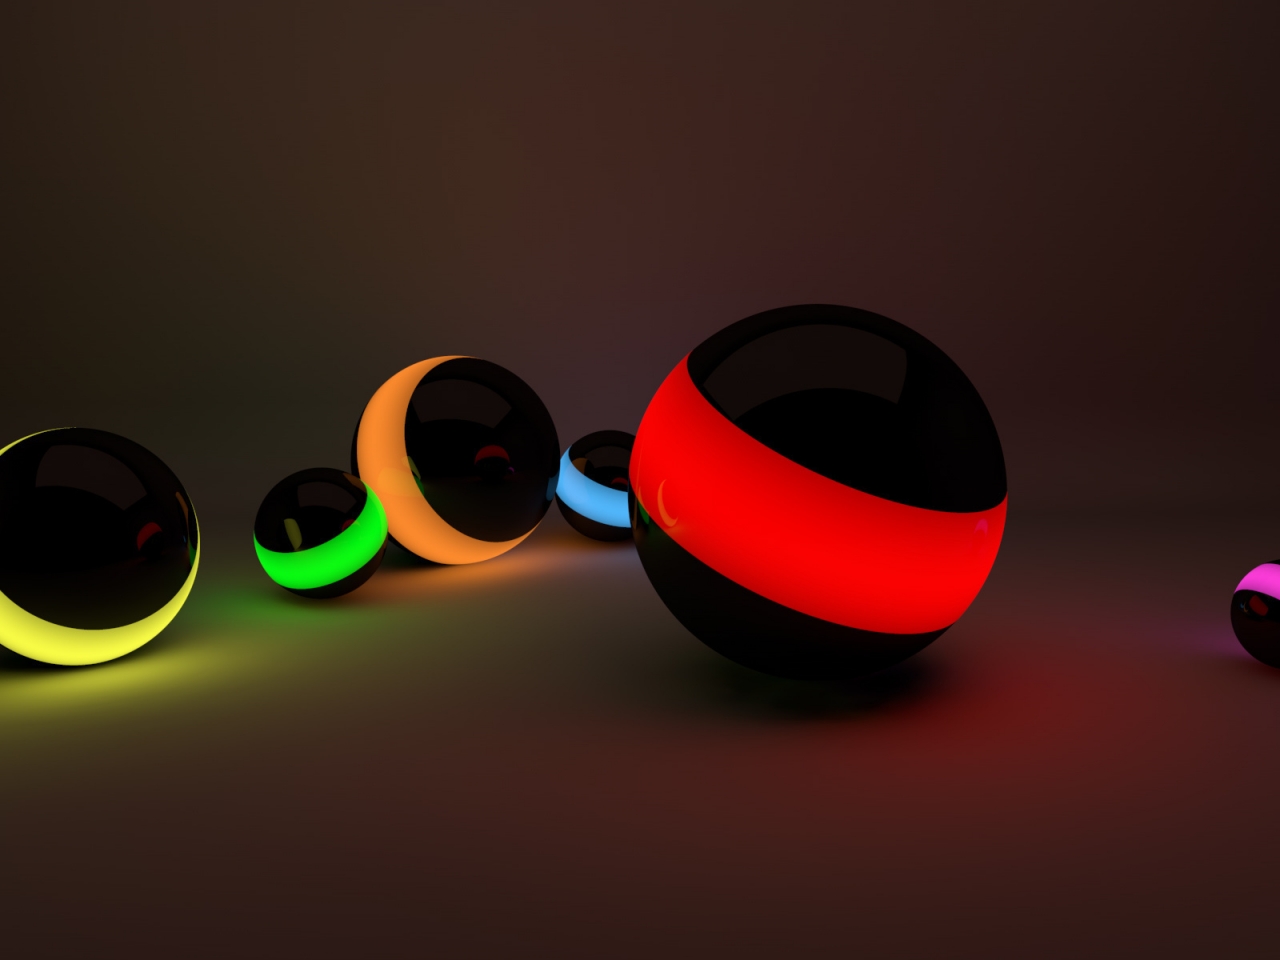 Balls Lights for 1280 x 960 resolution